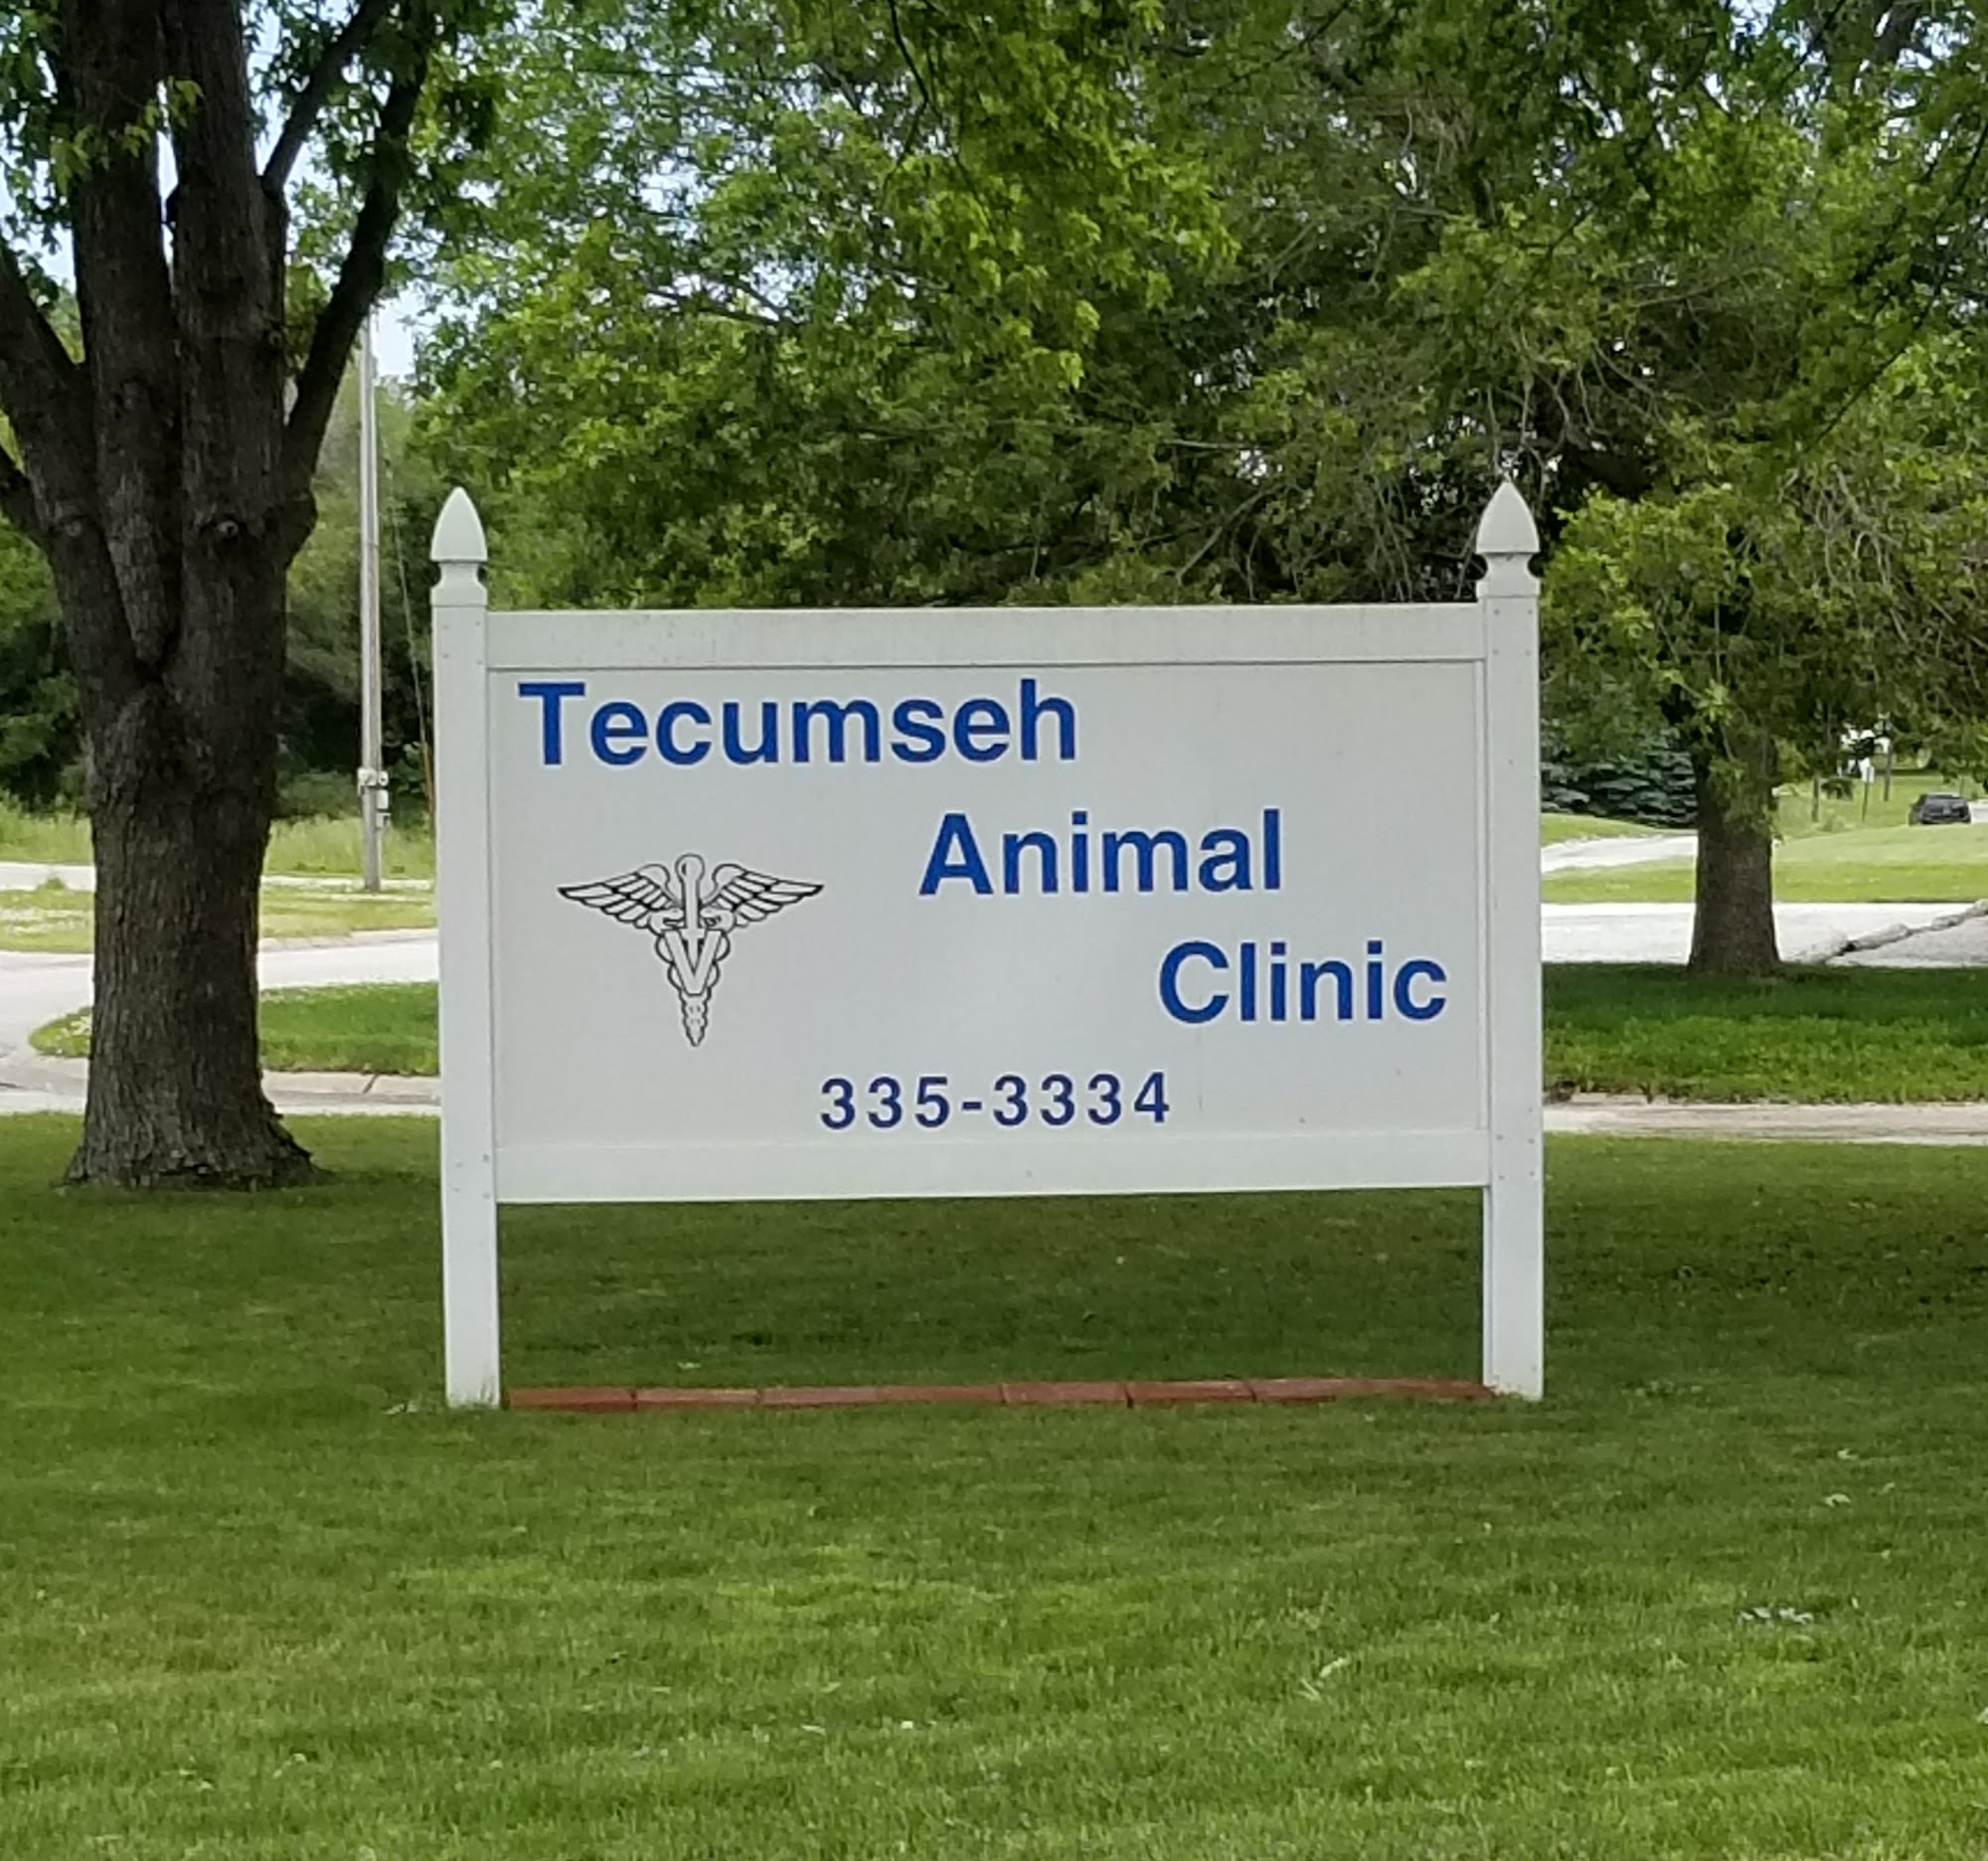 Tecumseh Animal Clinic 420 S 9th St, Tecumseh Nebraska 68450